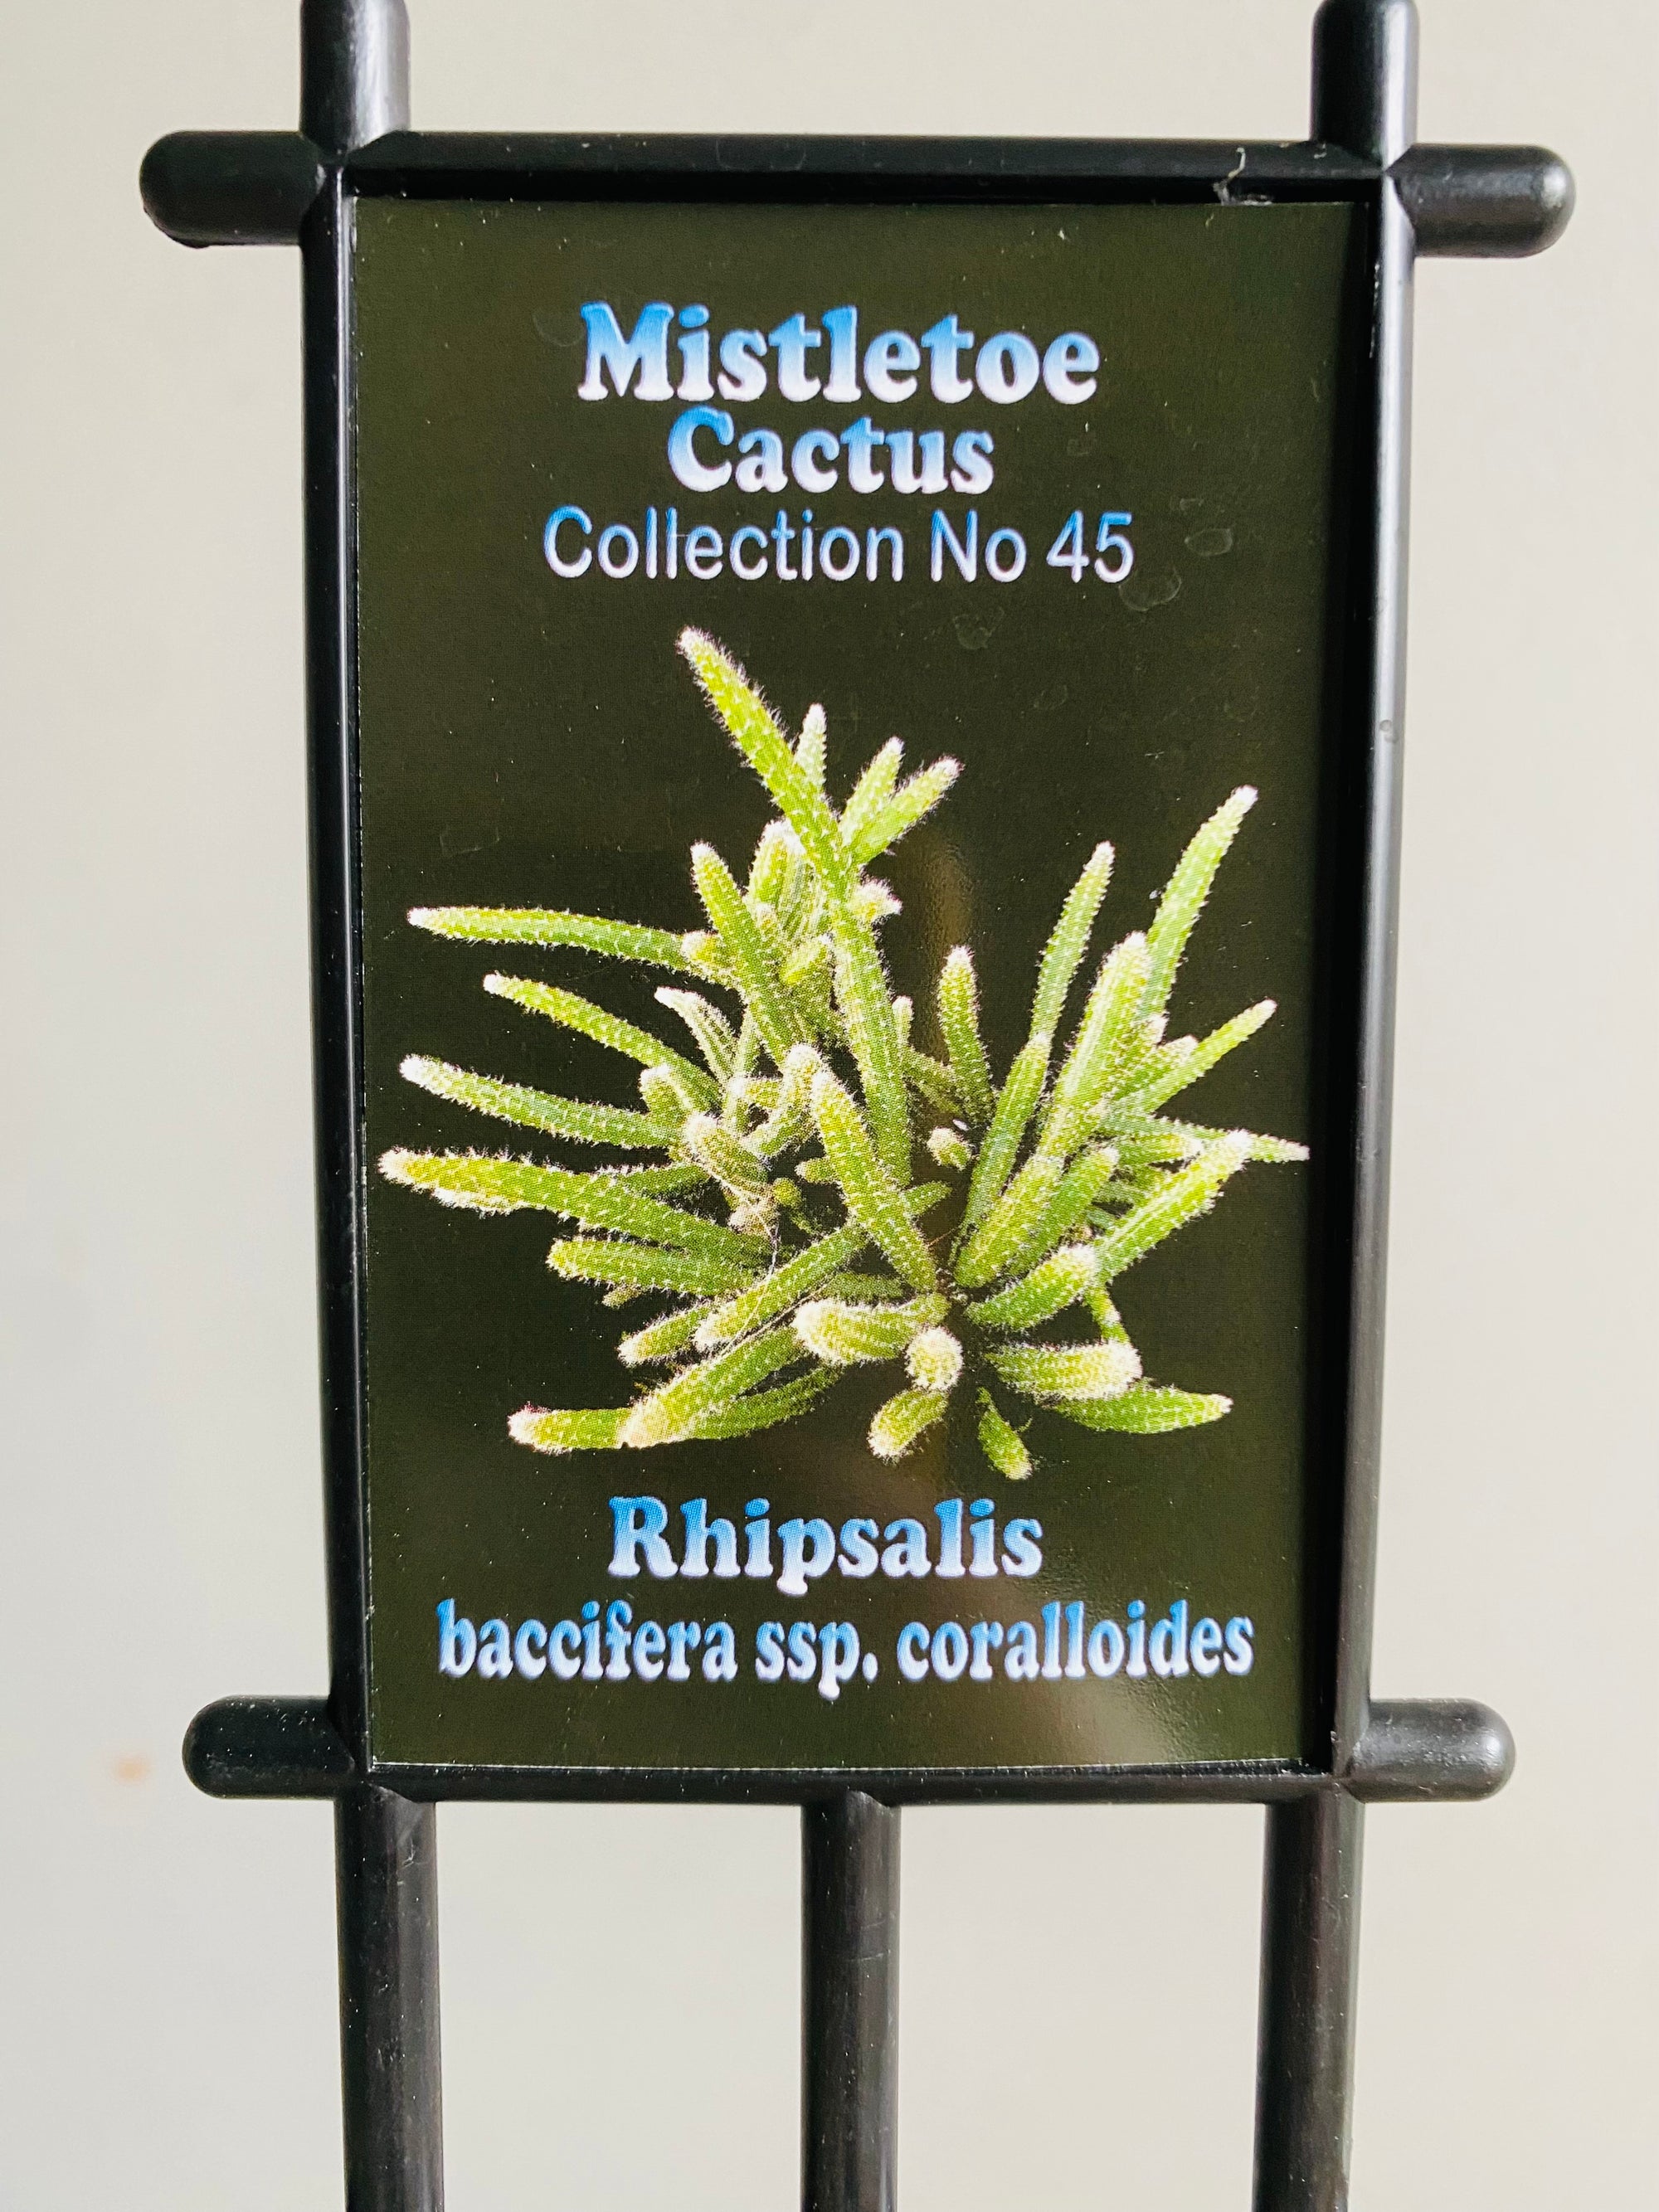 Rhipsalis baccifera ssp.coralloides - Mistletoe Cactus Collection No. 45